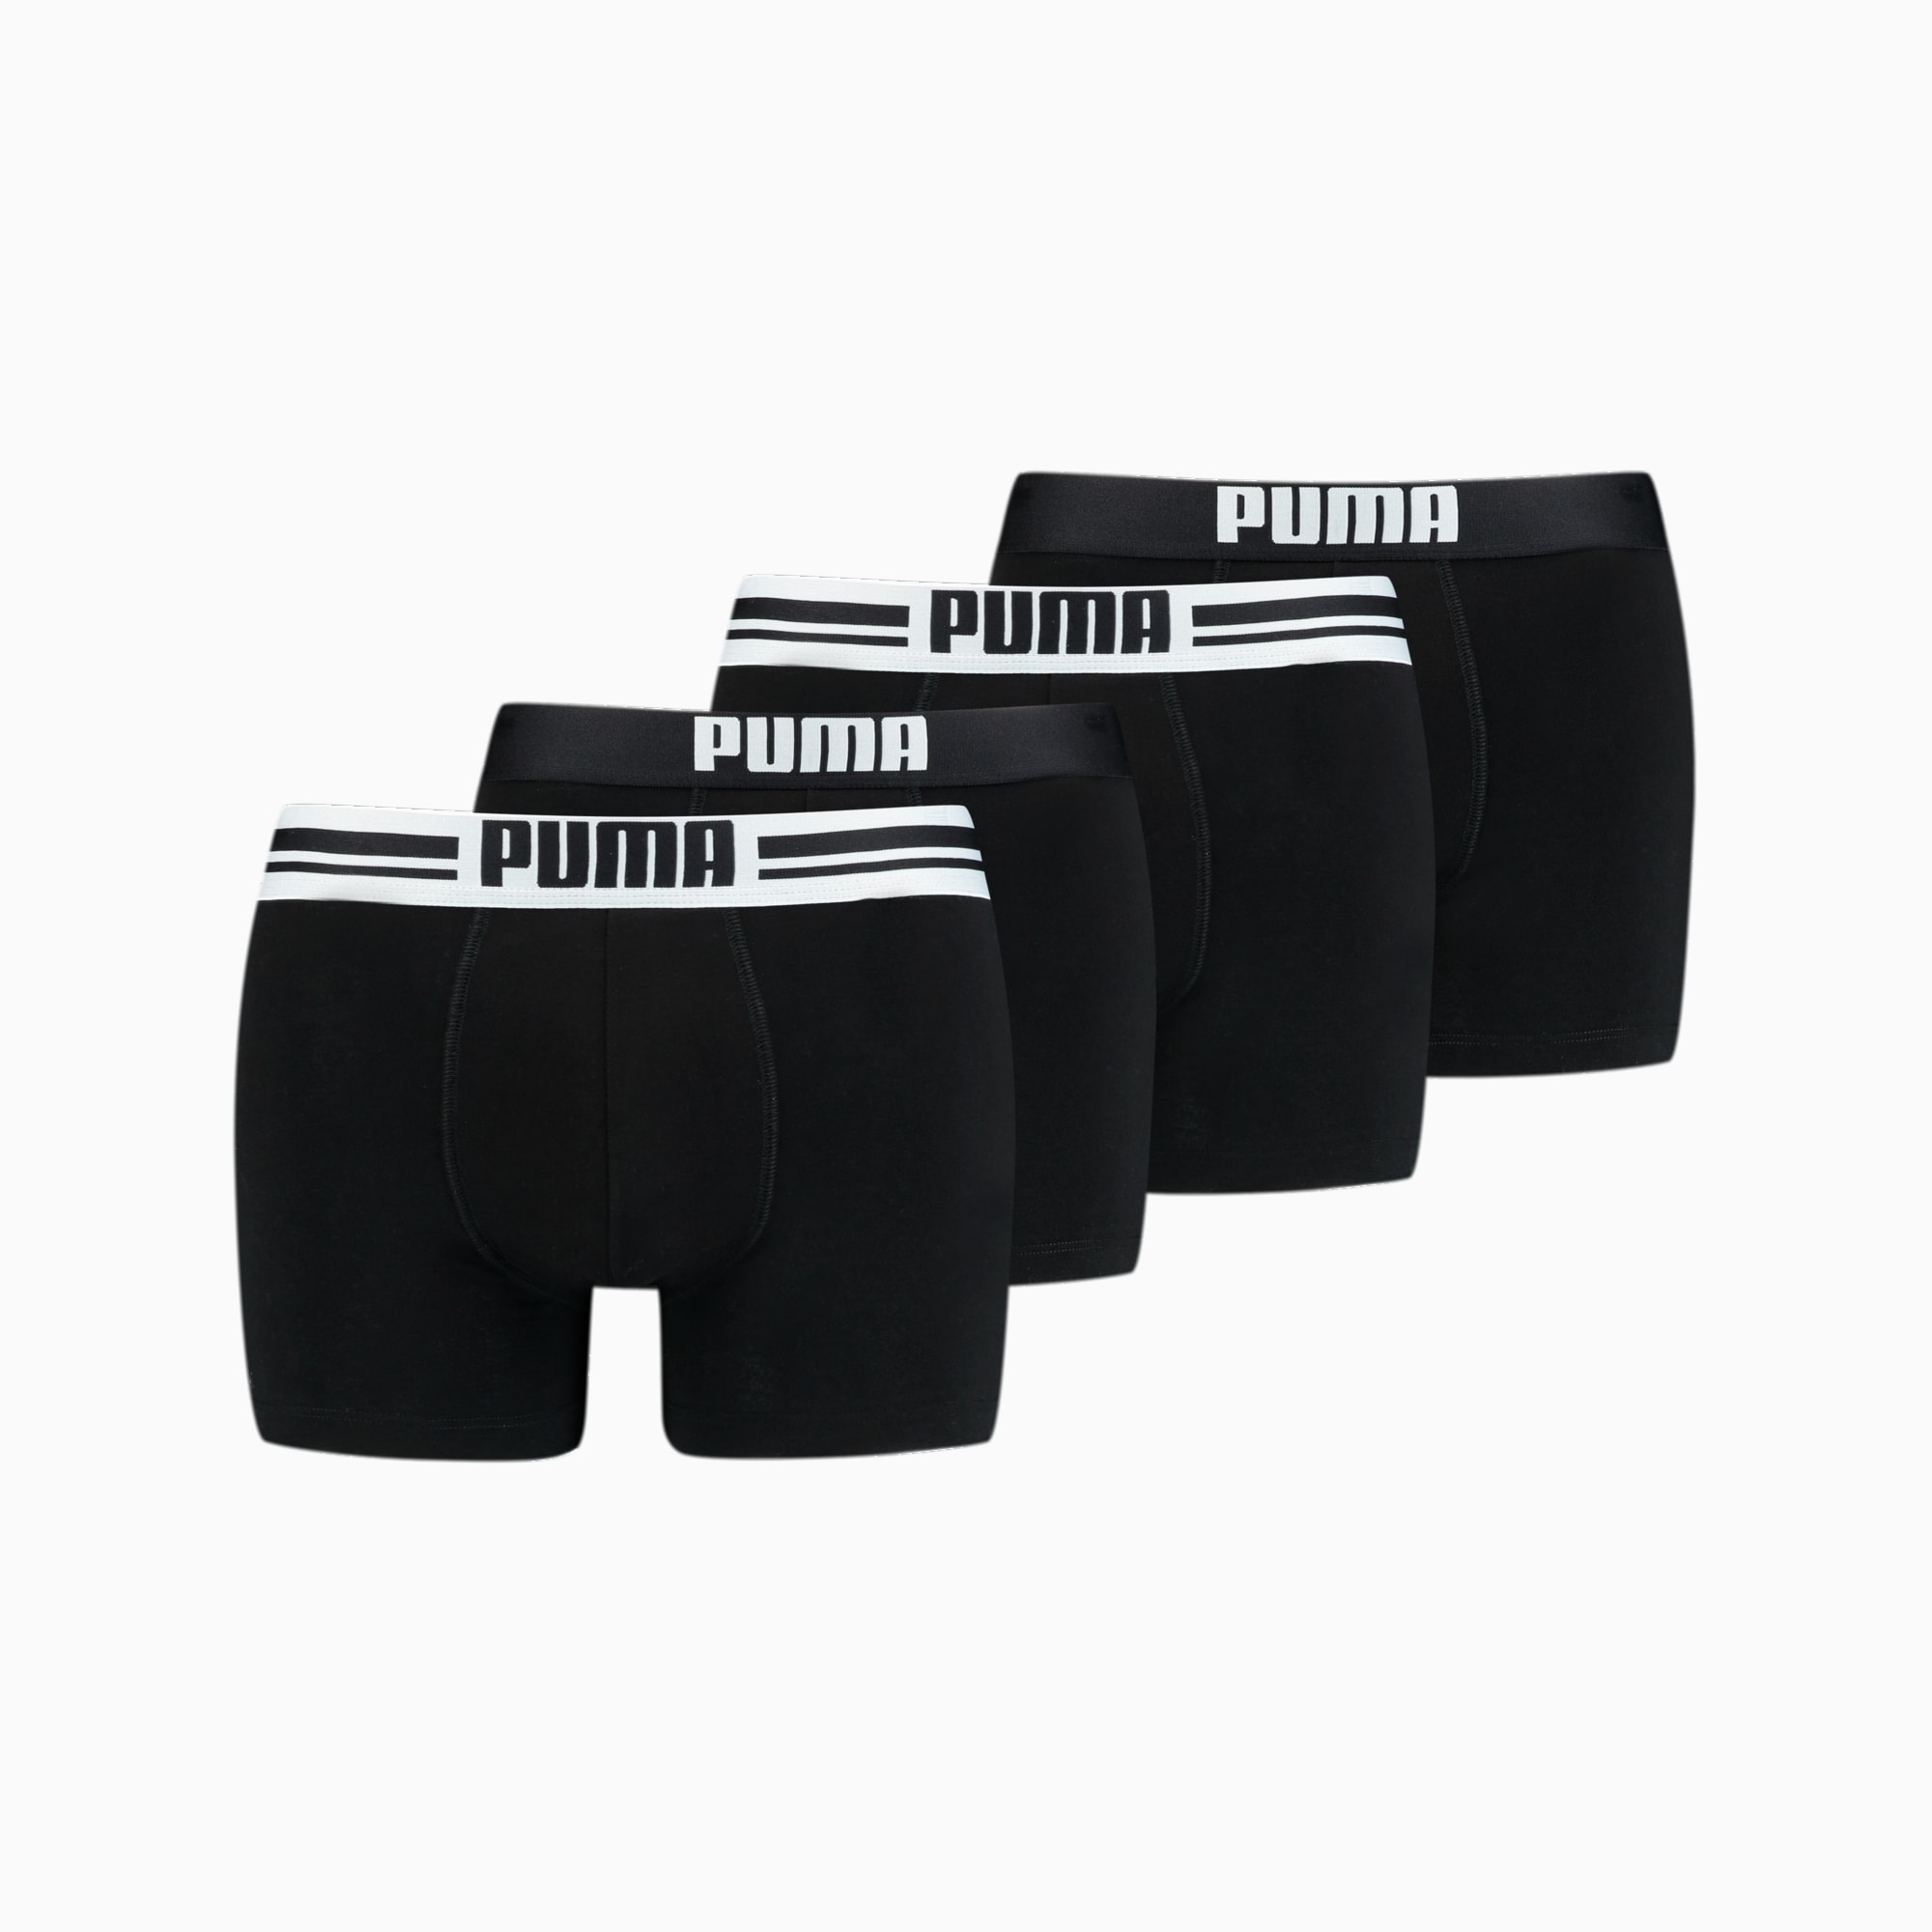 PUMA Placed Logo Men's Boxers 4 Pack, Black